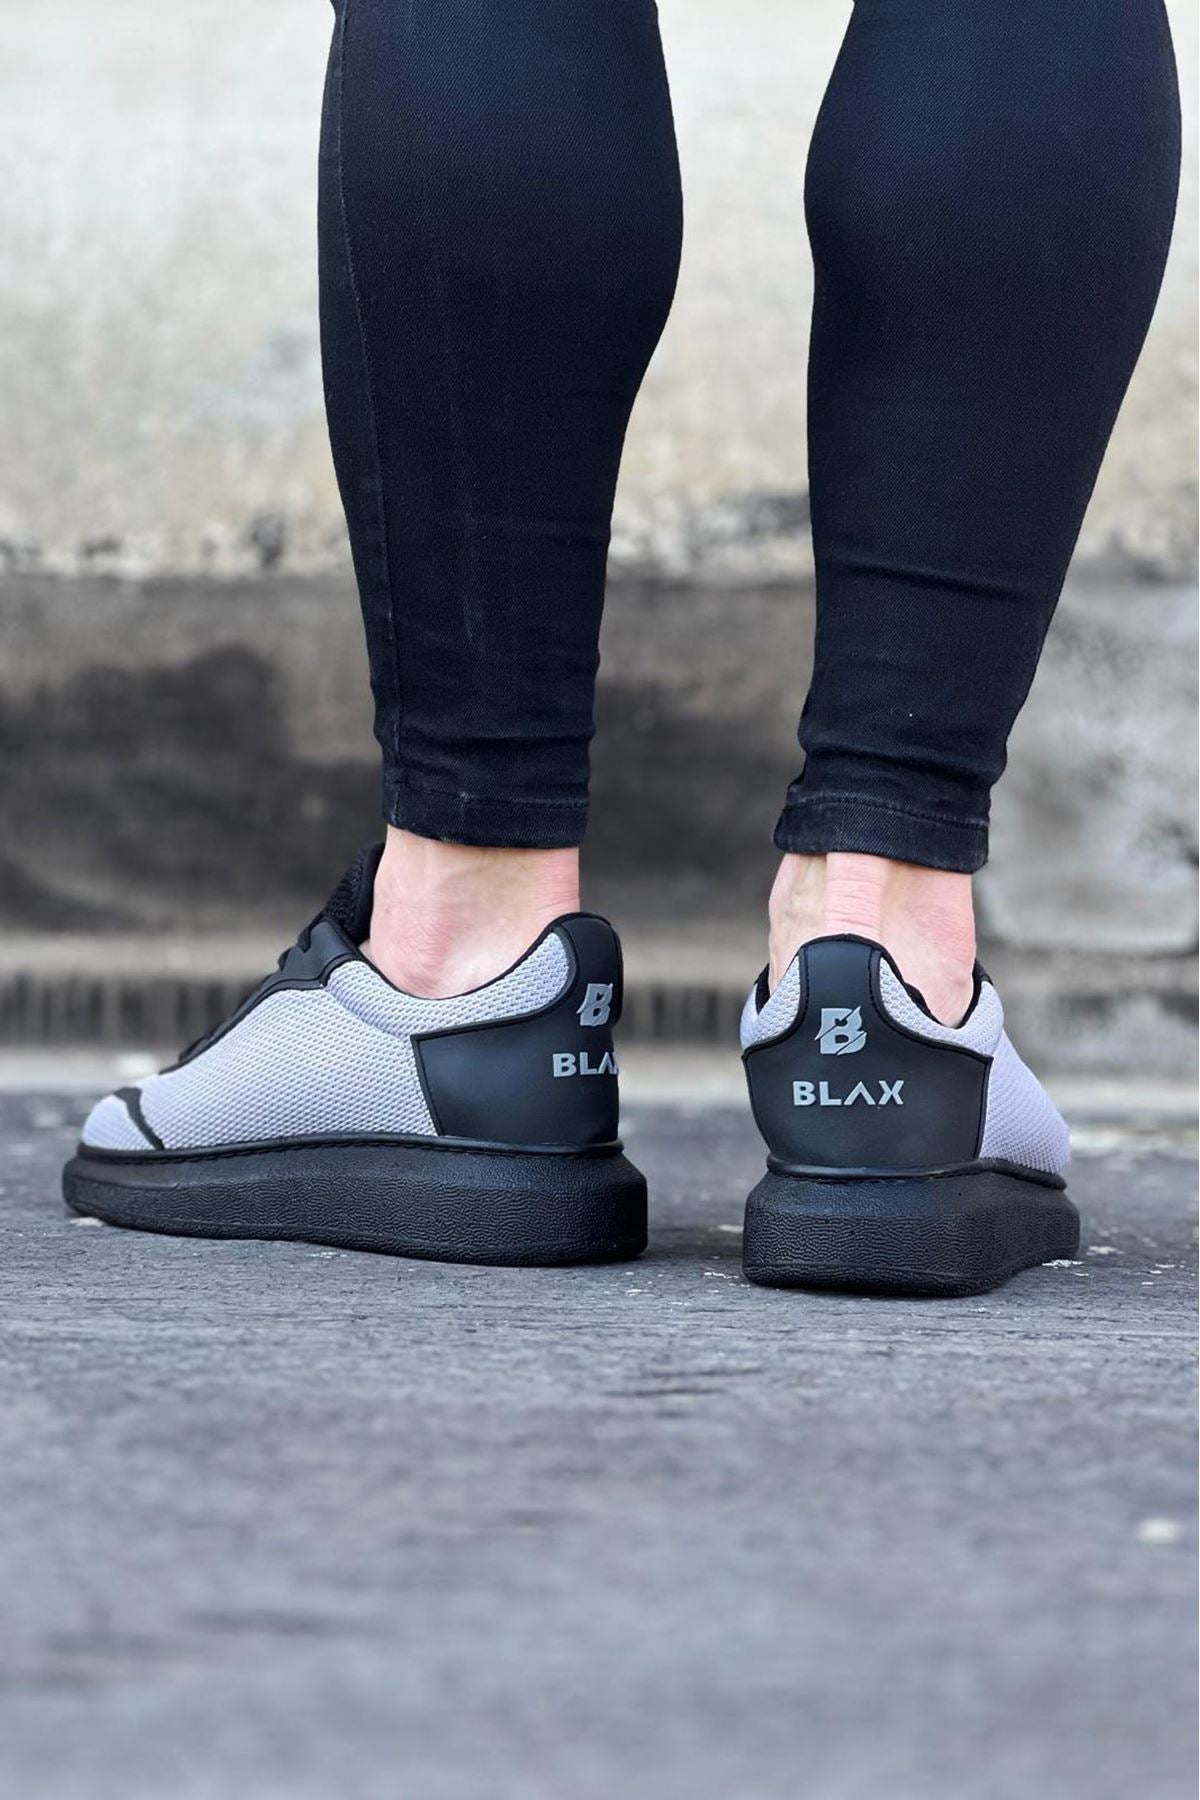 WG019 Gray Black Knitwear Men's Casual Shoes - STREETMODE™